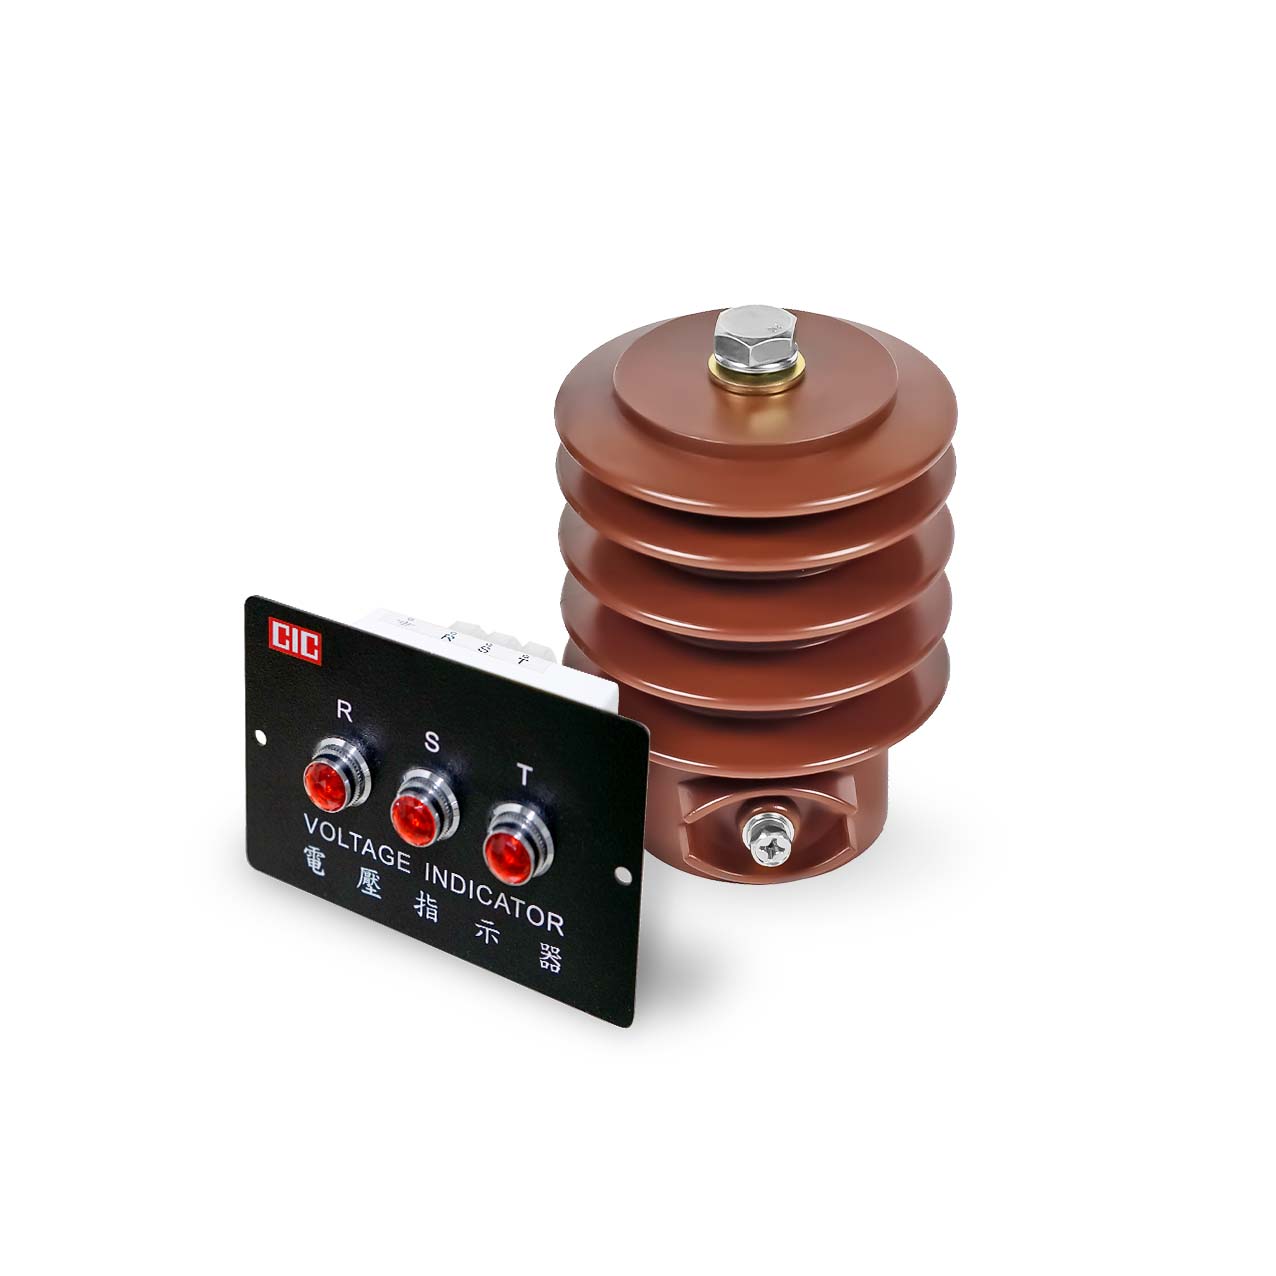 Voltage Indicator for a Medium-Voltage System